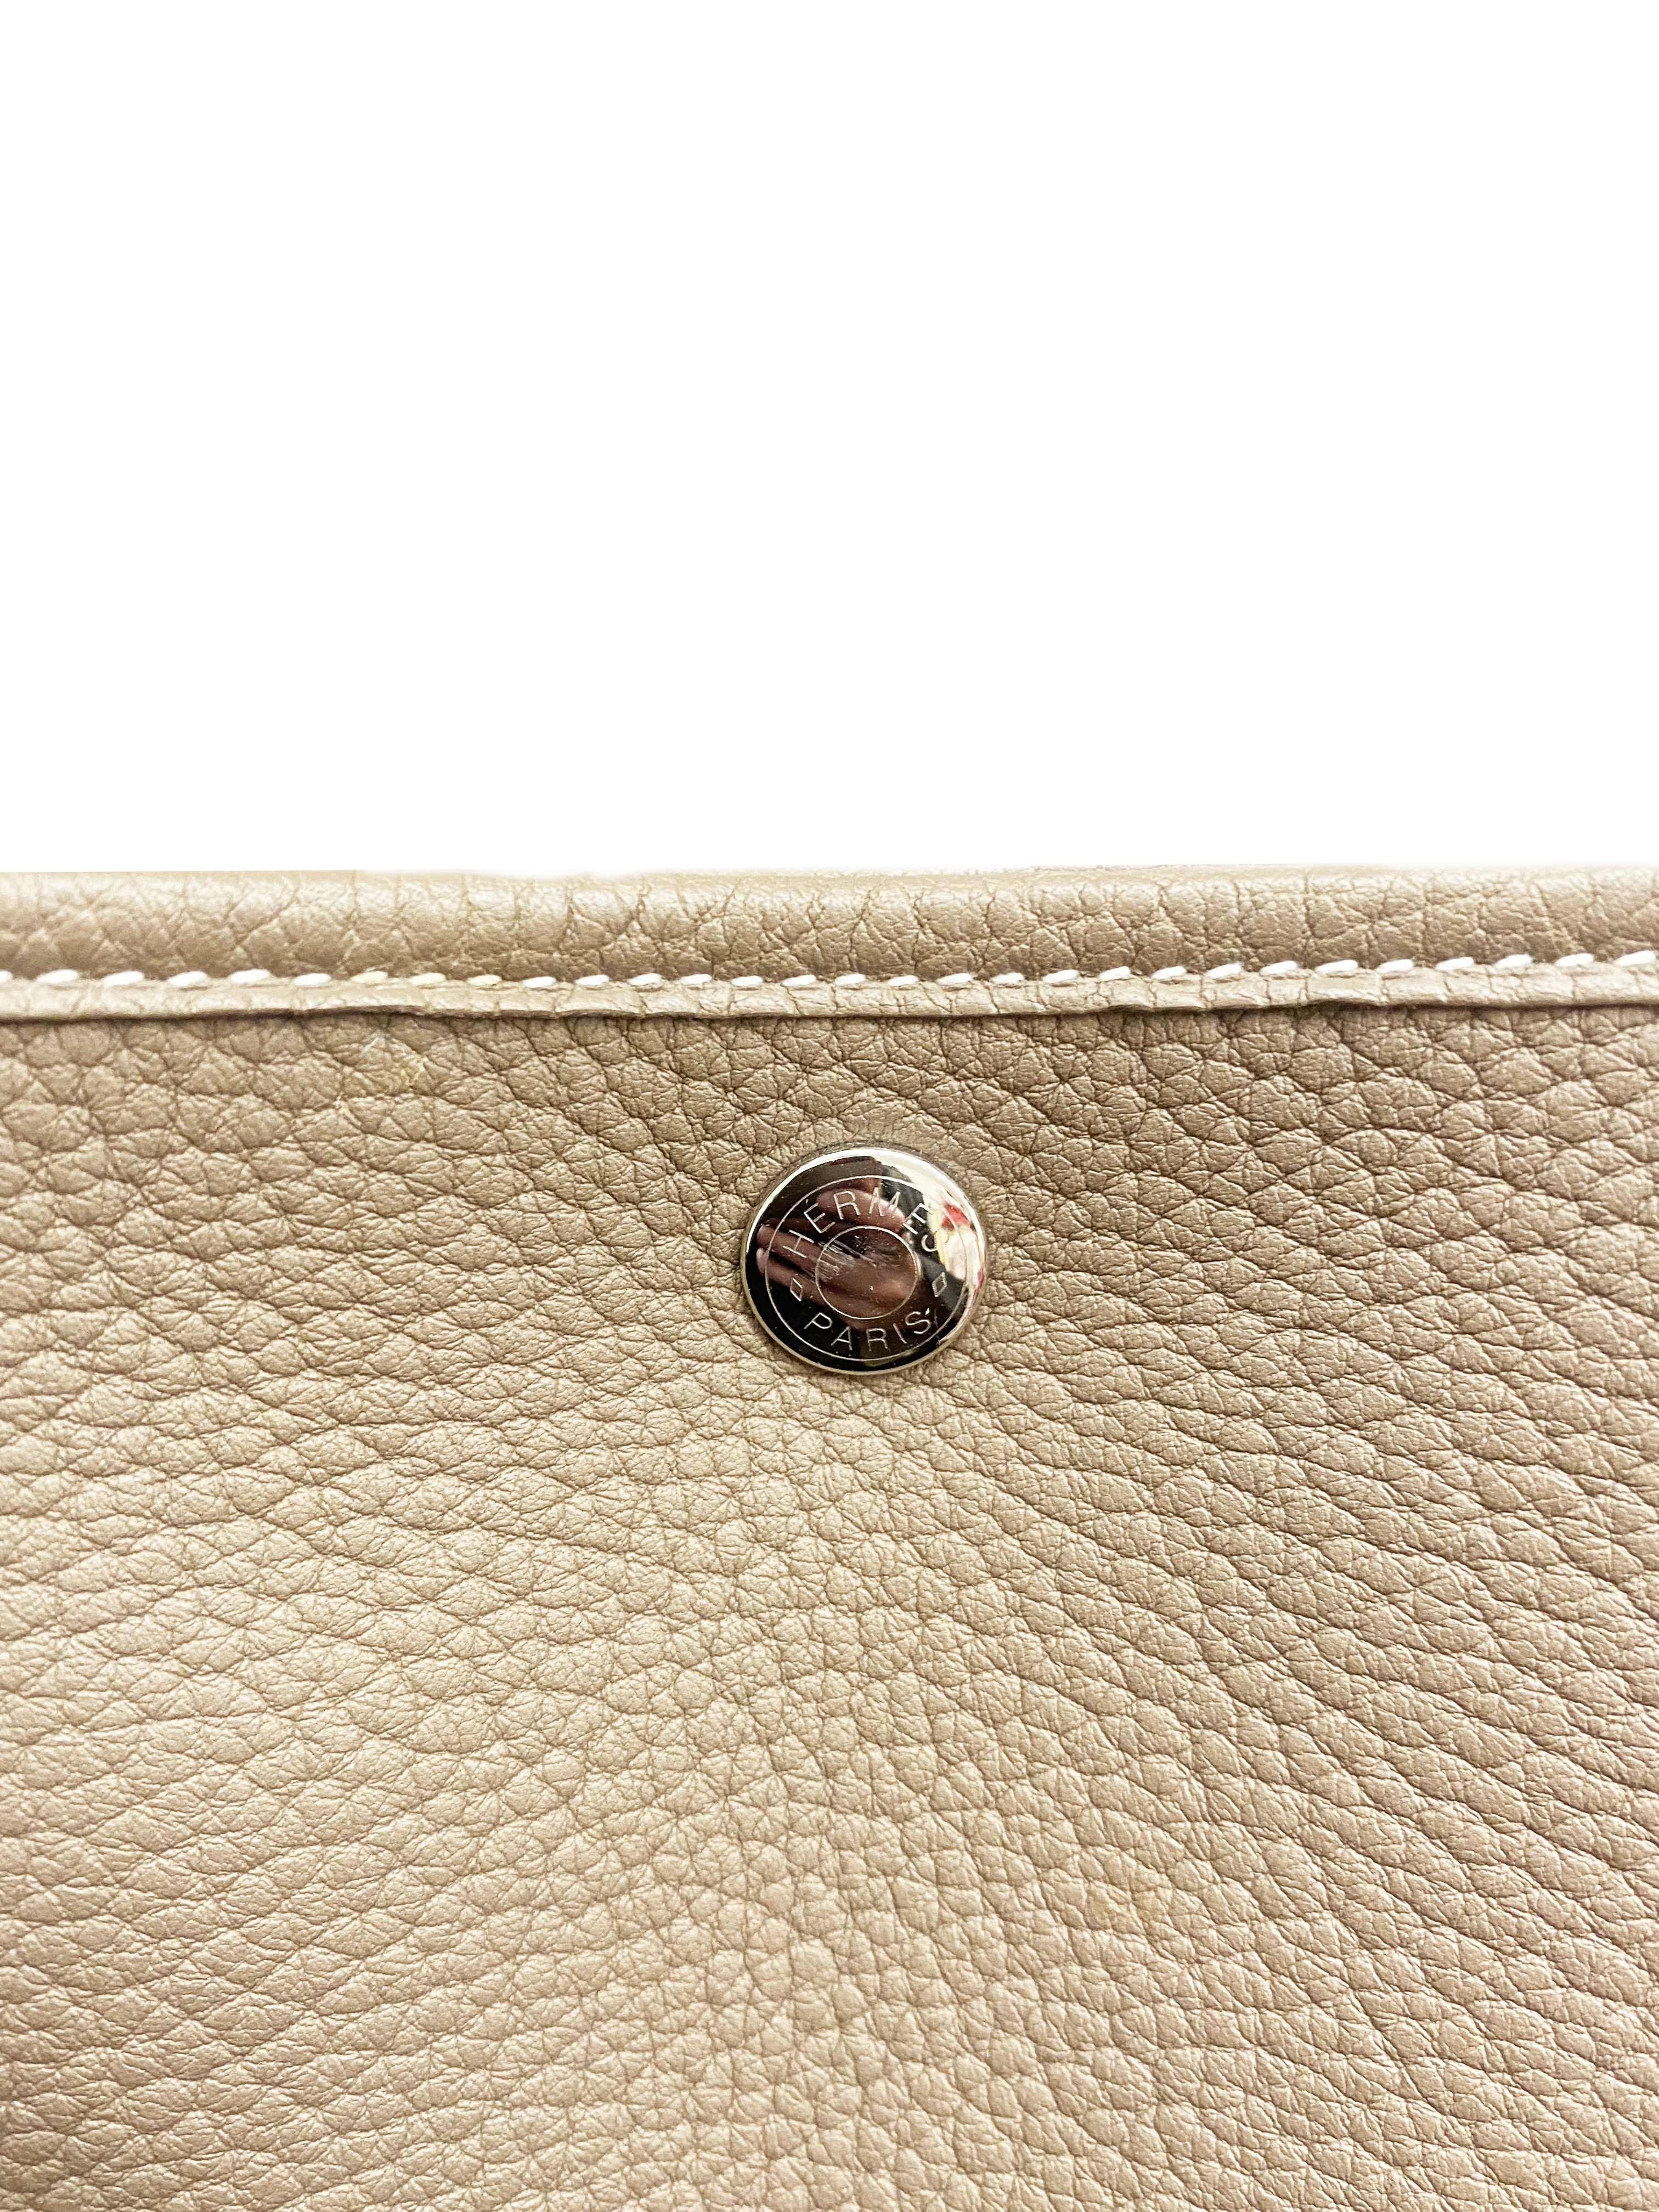 Hermes Garden Party Pm Tweed Handbag Leather Brown Series Silver